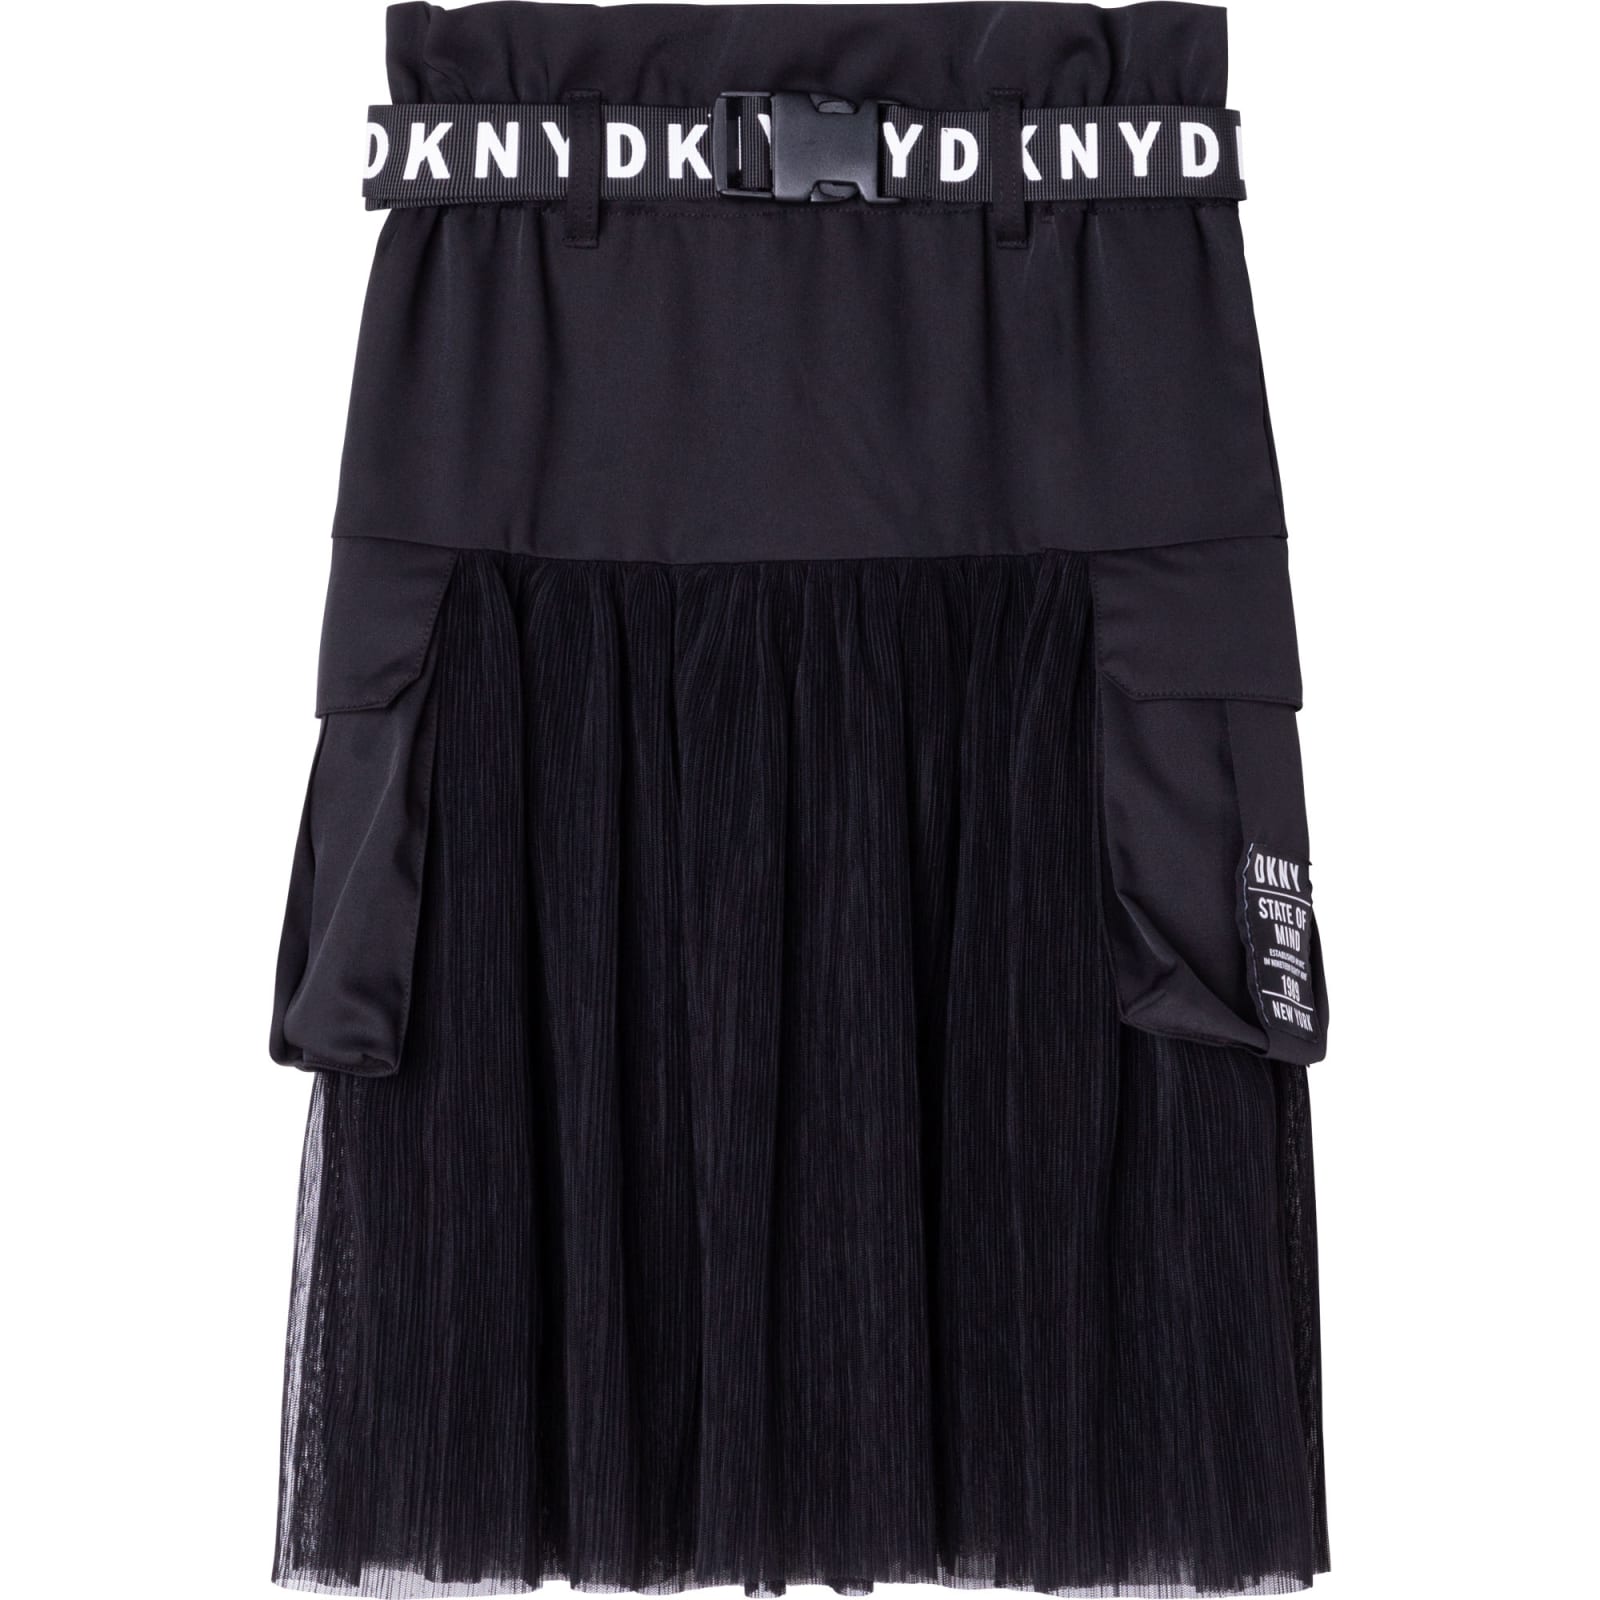 DKNY Skirt With Print